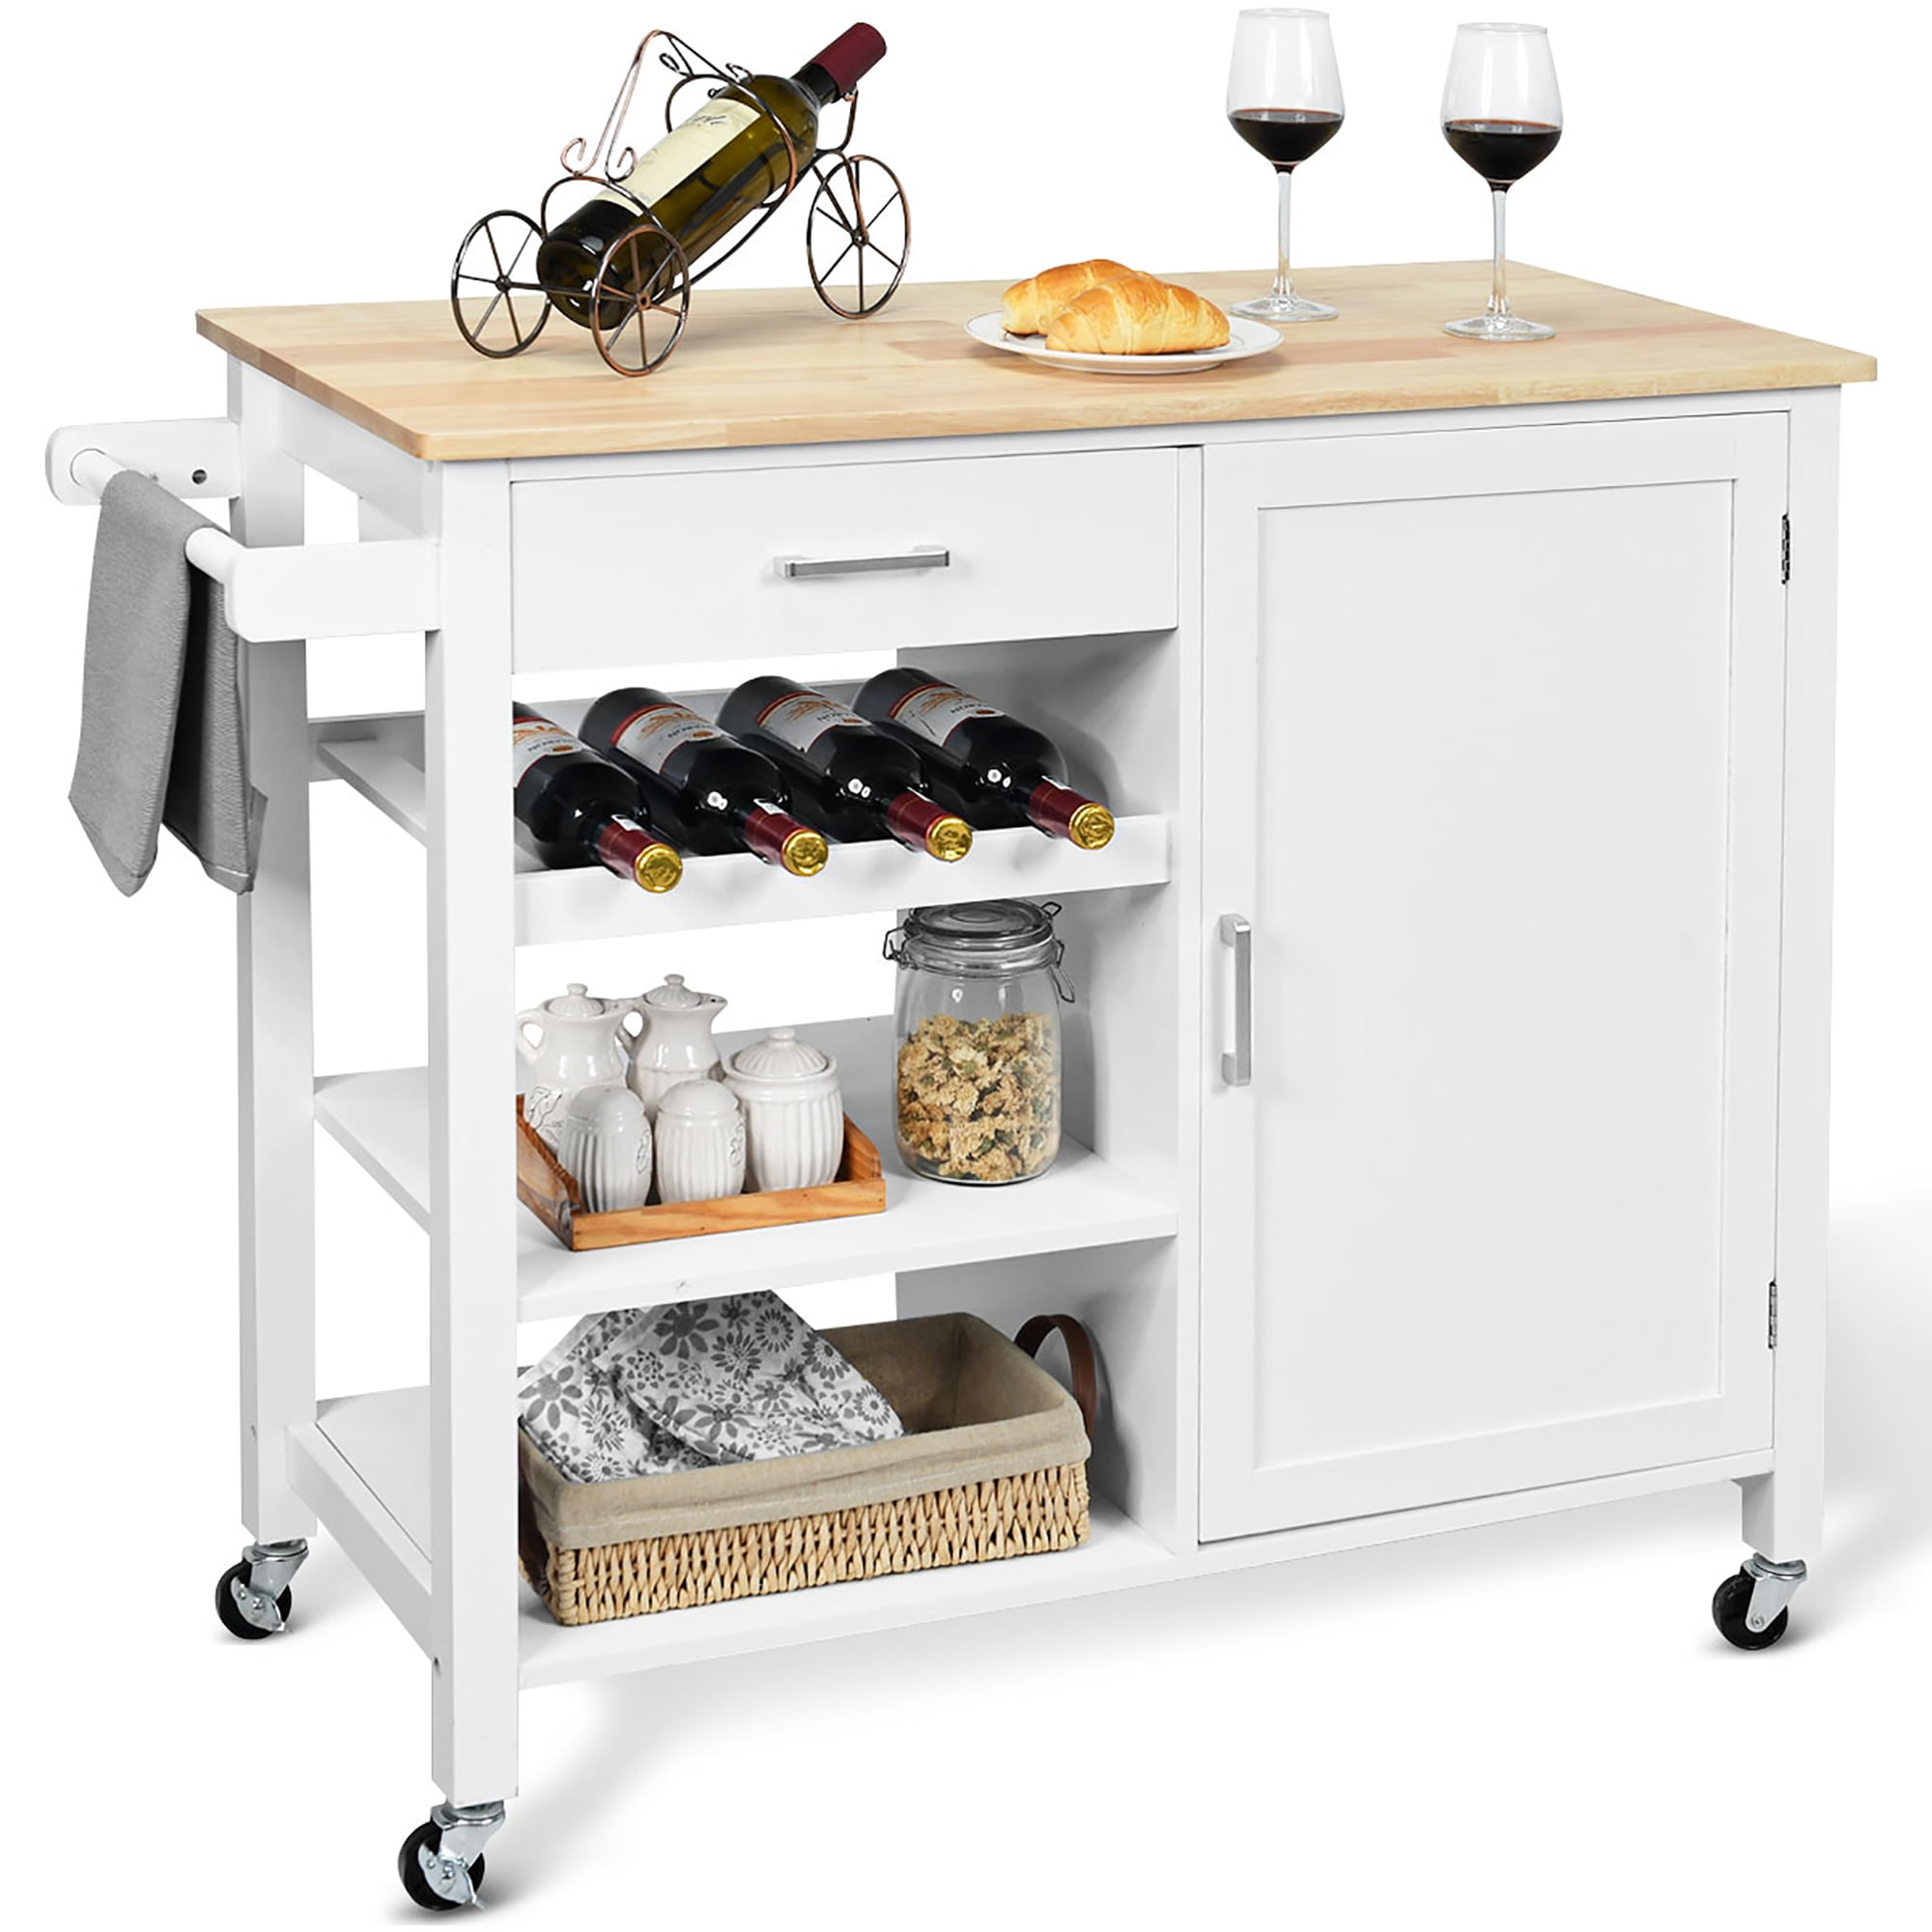 4 Tier Kitchen Trolley White Wooden Cart Basket Storage Drawer By Home Discount 